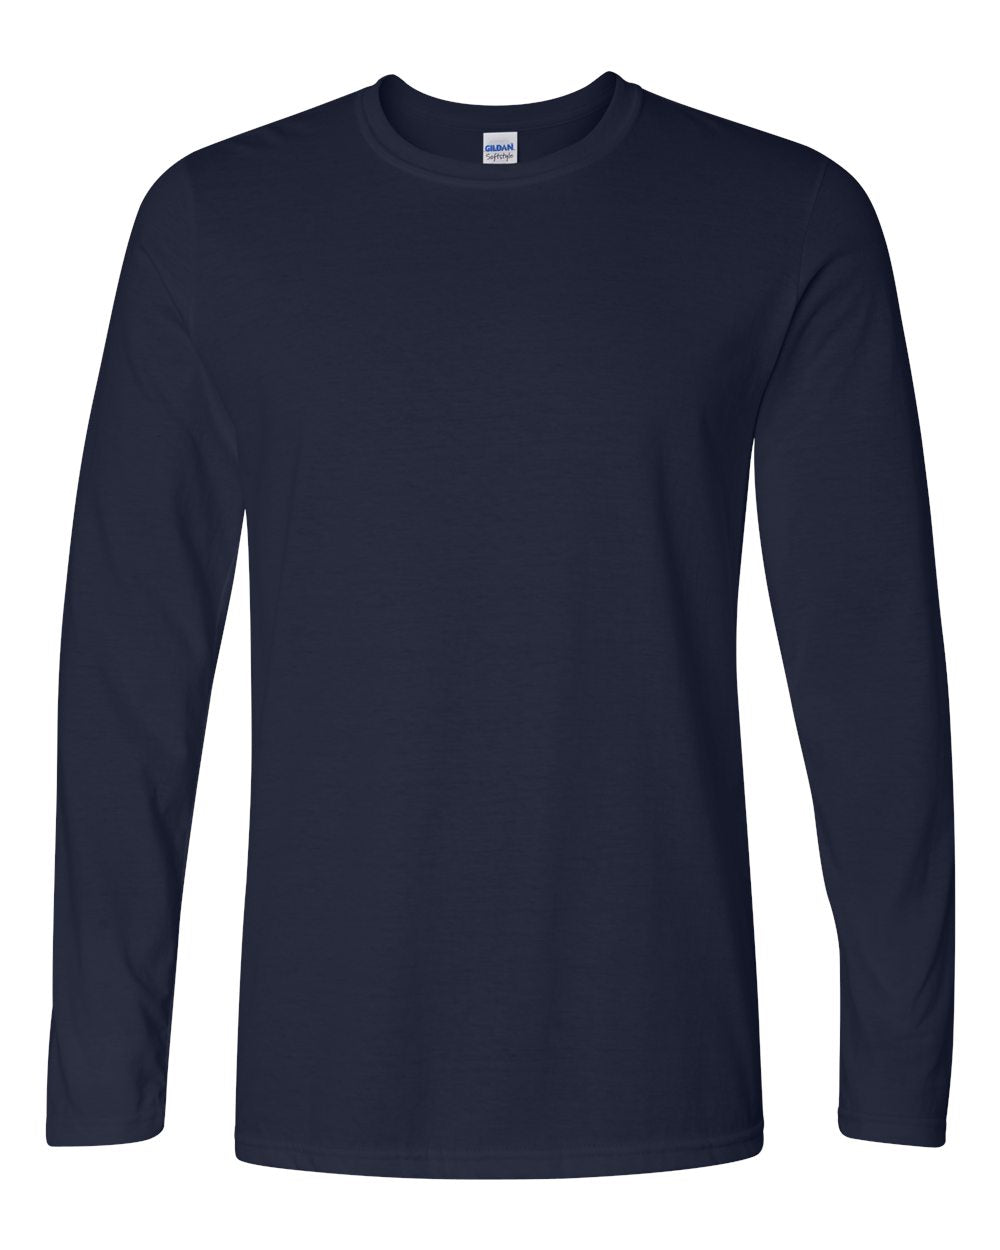 Gildan - Softstyle Long Sleeve T-Shirt - 64400